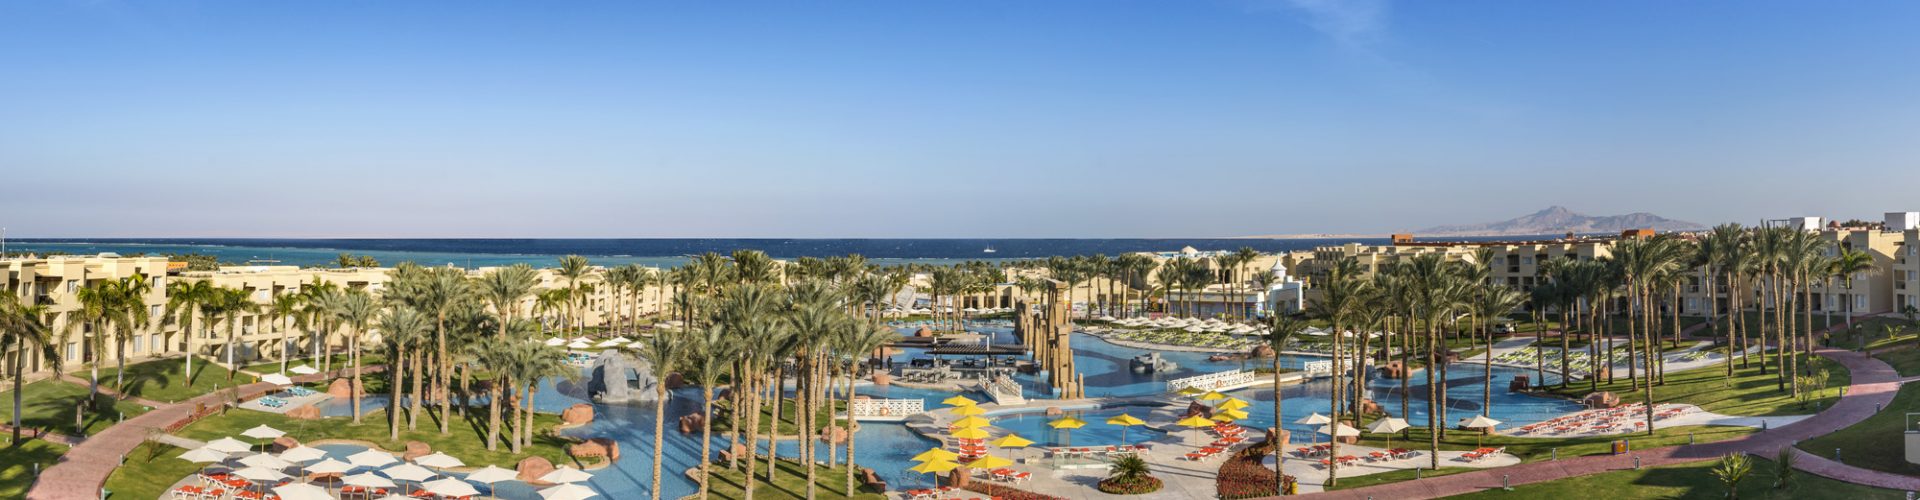 Pool View Palms Sea Red Sea Luxury Hotel Rixos Seagate Sharm SPA Room Bar All Inclusive Ultra Turkish Egypt Sharm El Sheikh Animation